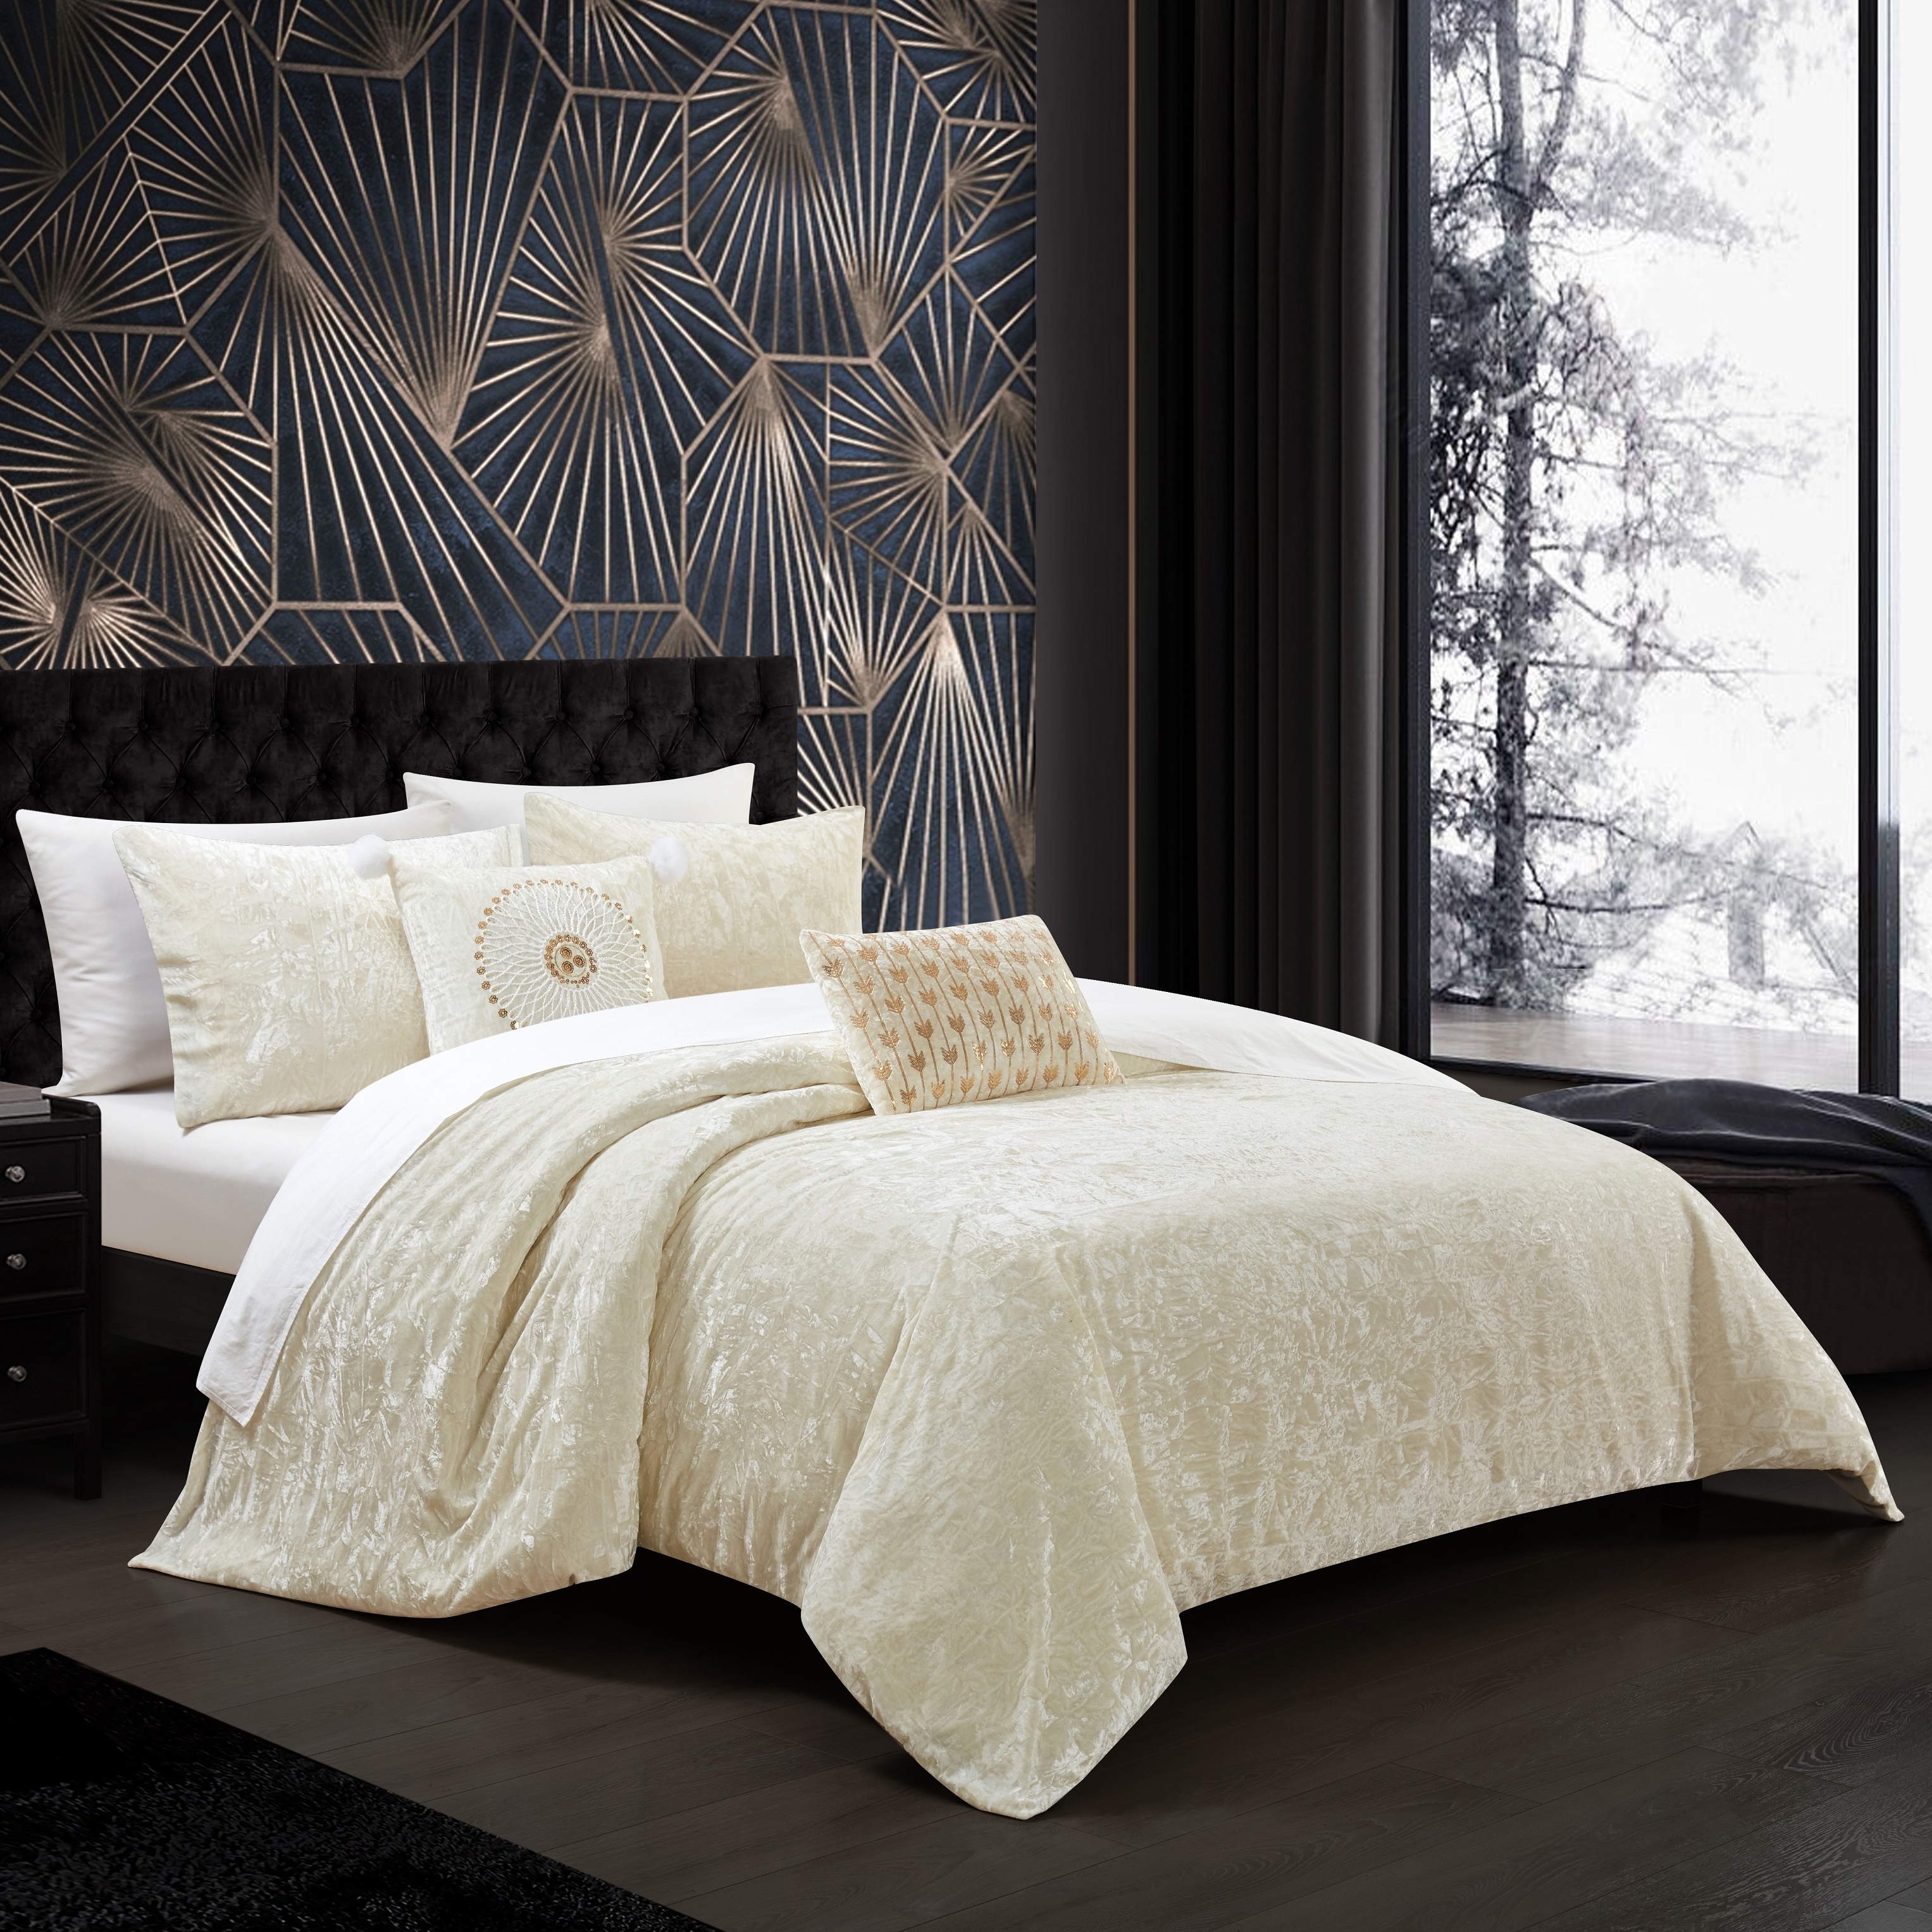 Giuliana 5 Piece Comforter Set Crinkle Crushed Velvet Bedding - Blush, King